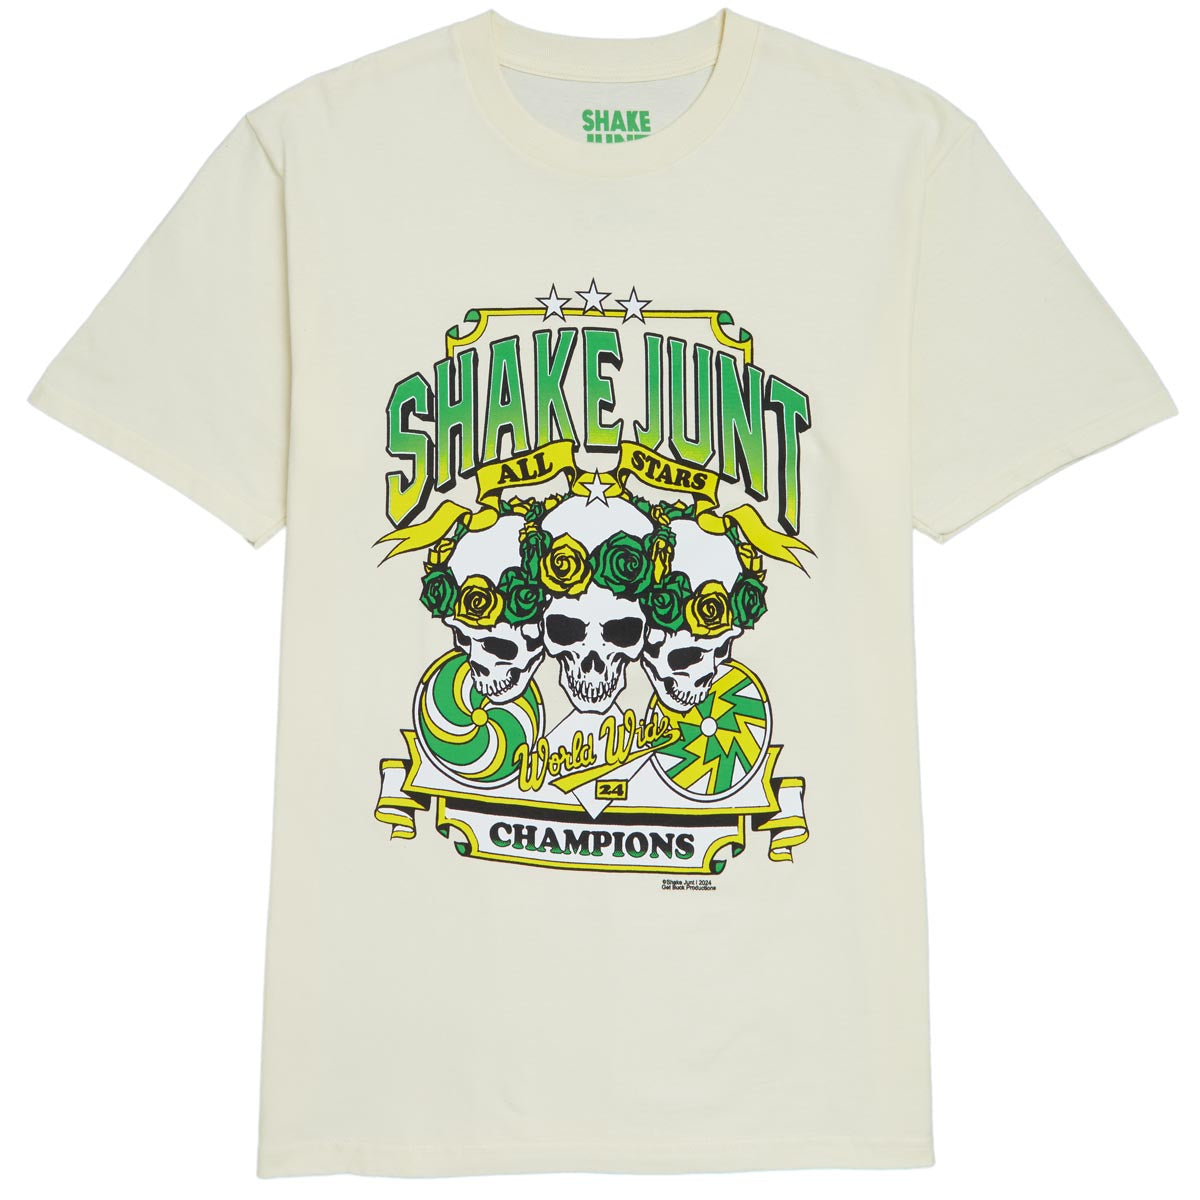 Shake Junt Gr8ful T-Shirt - Cream image 1